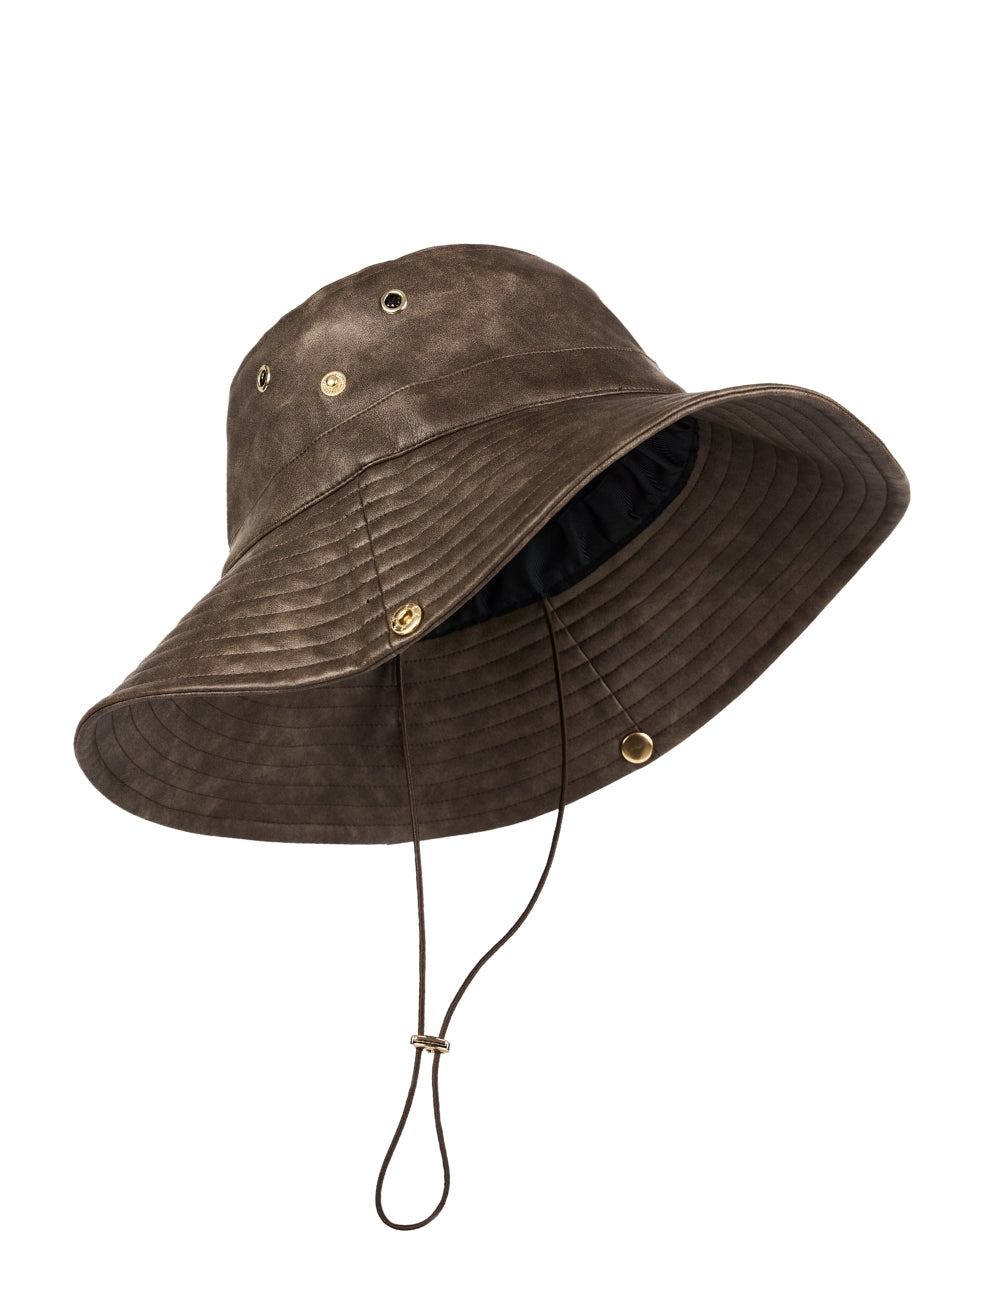 Fisherman's bucket hat made in canada luxury accessories vintage brown distressed vegan leather